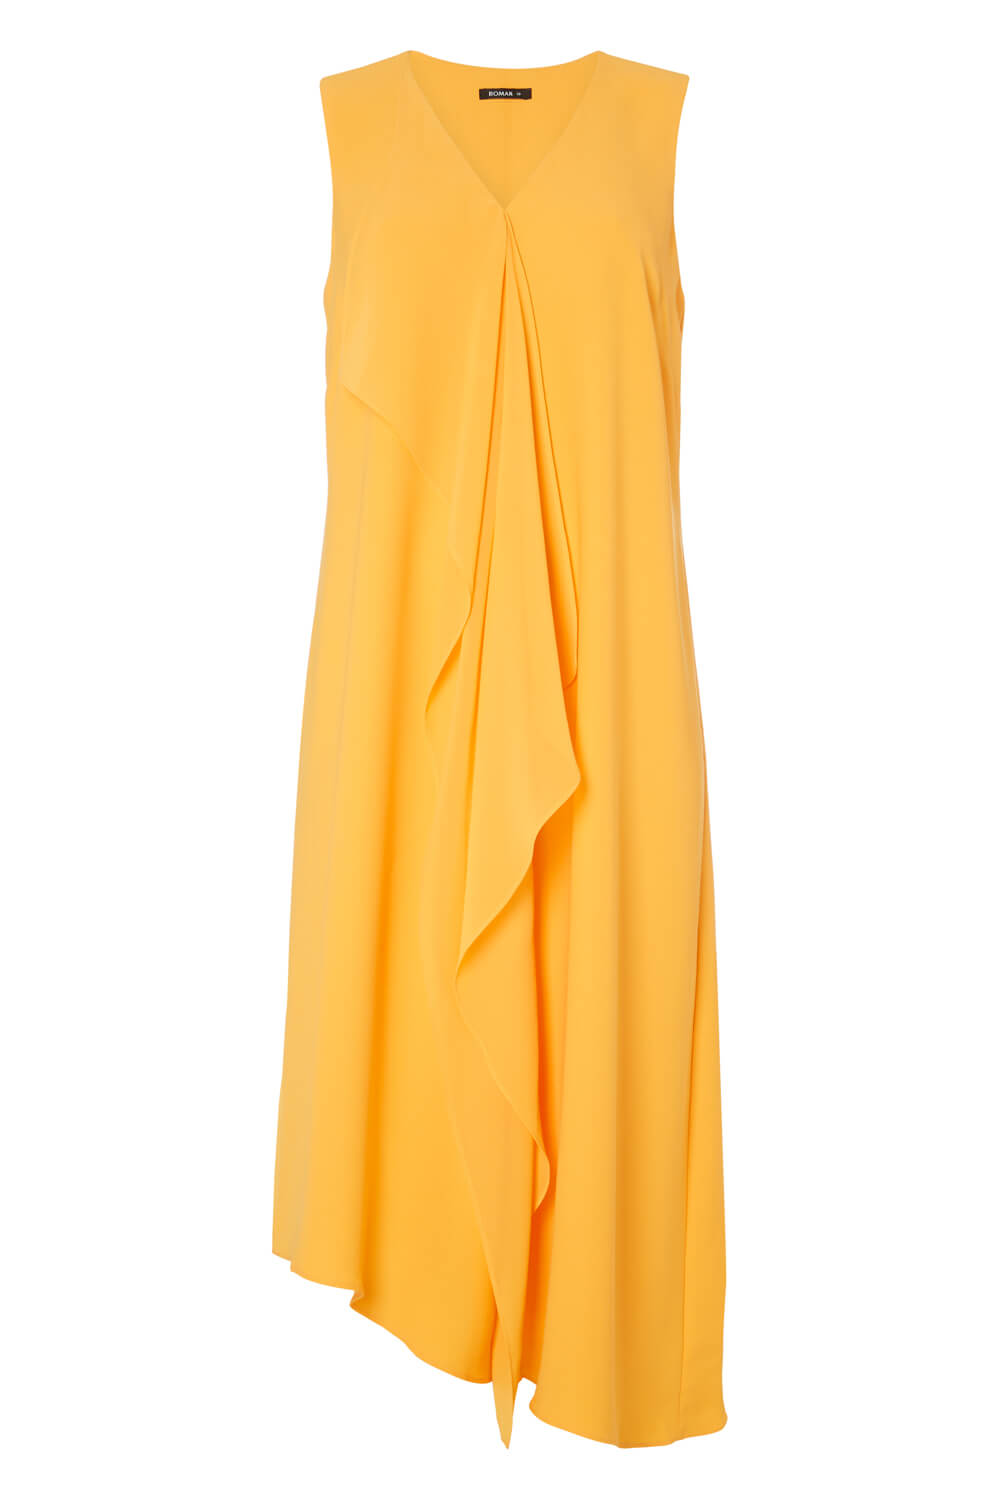 Yellow Waterfall Front Dress, Image 3 of 3